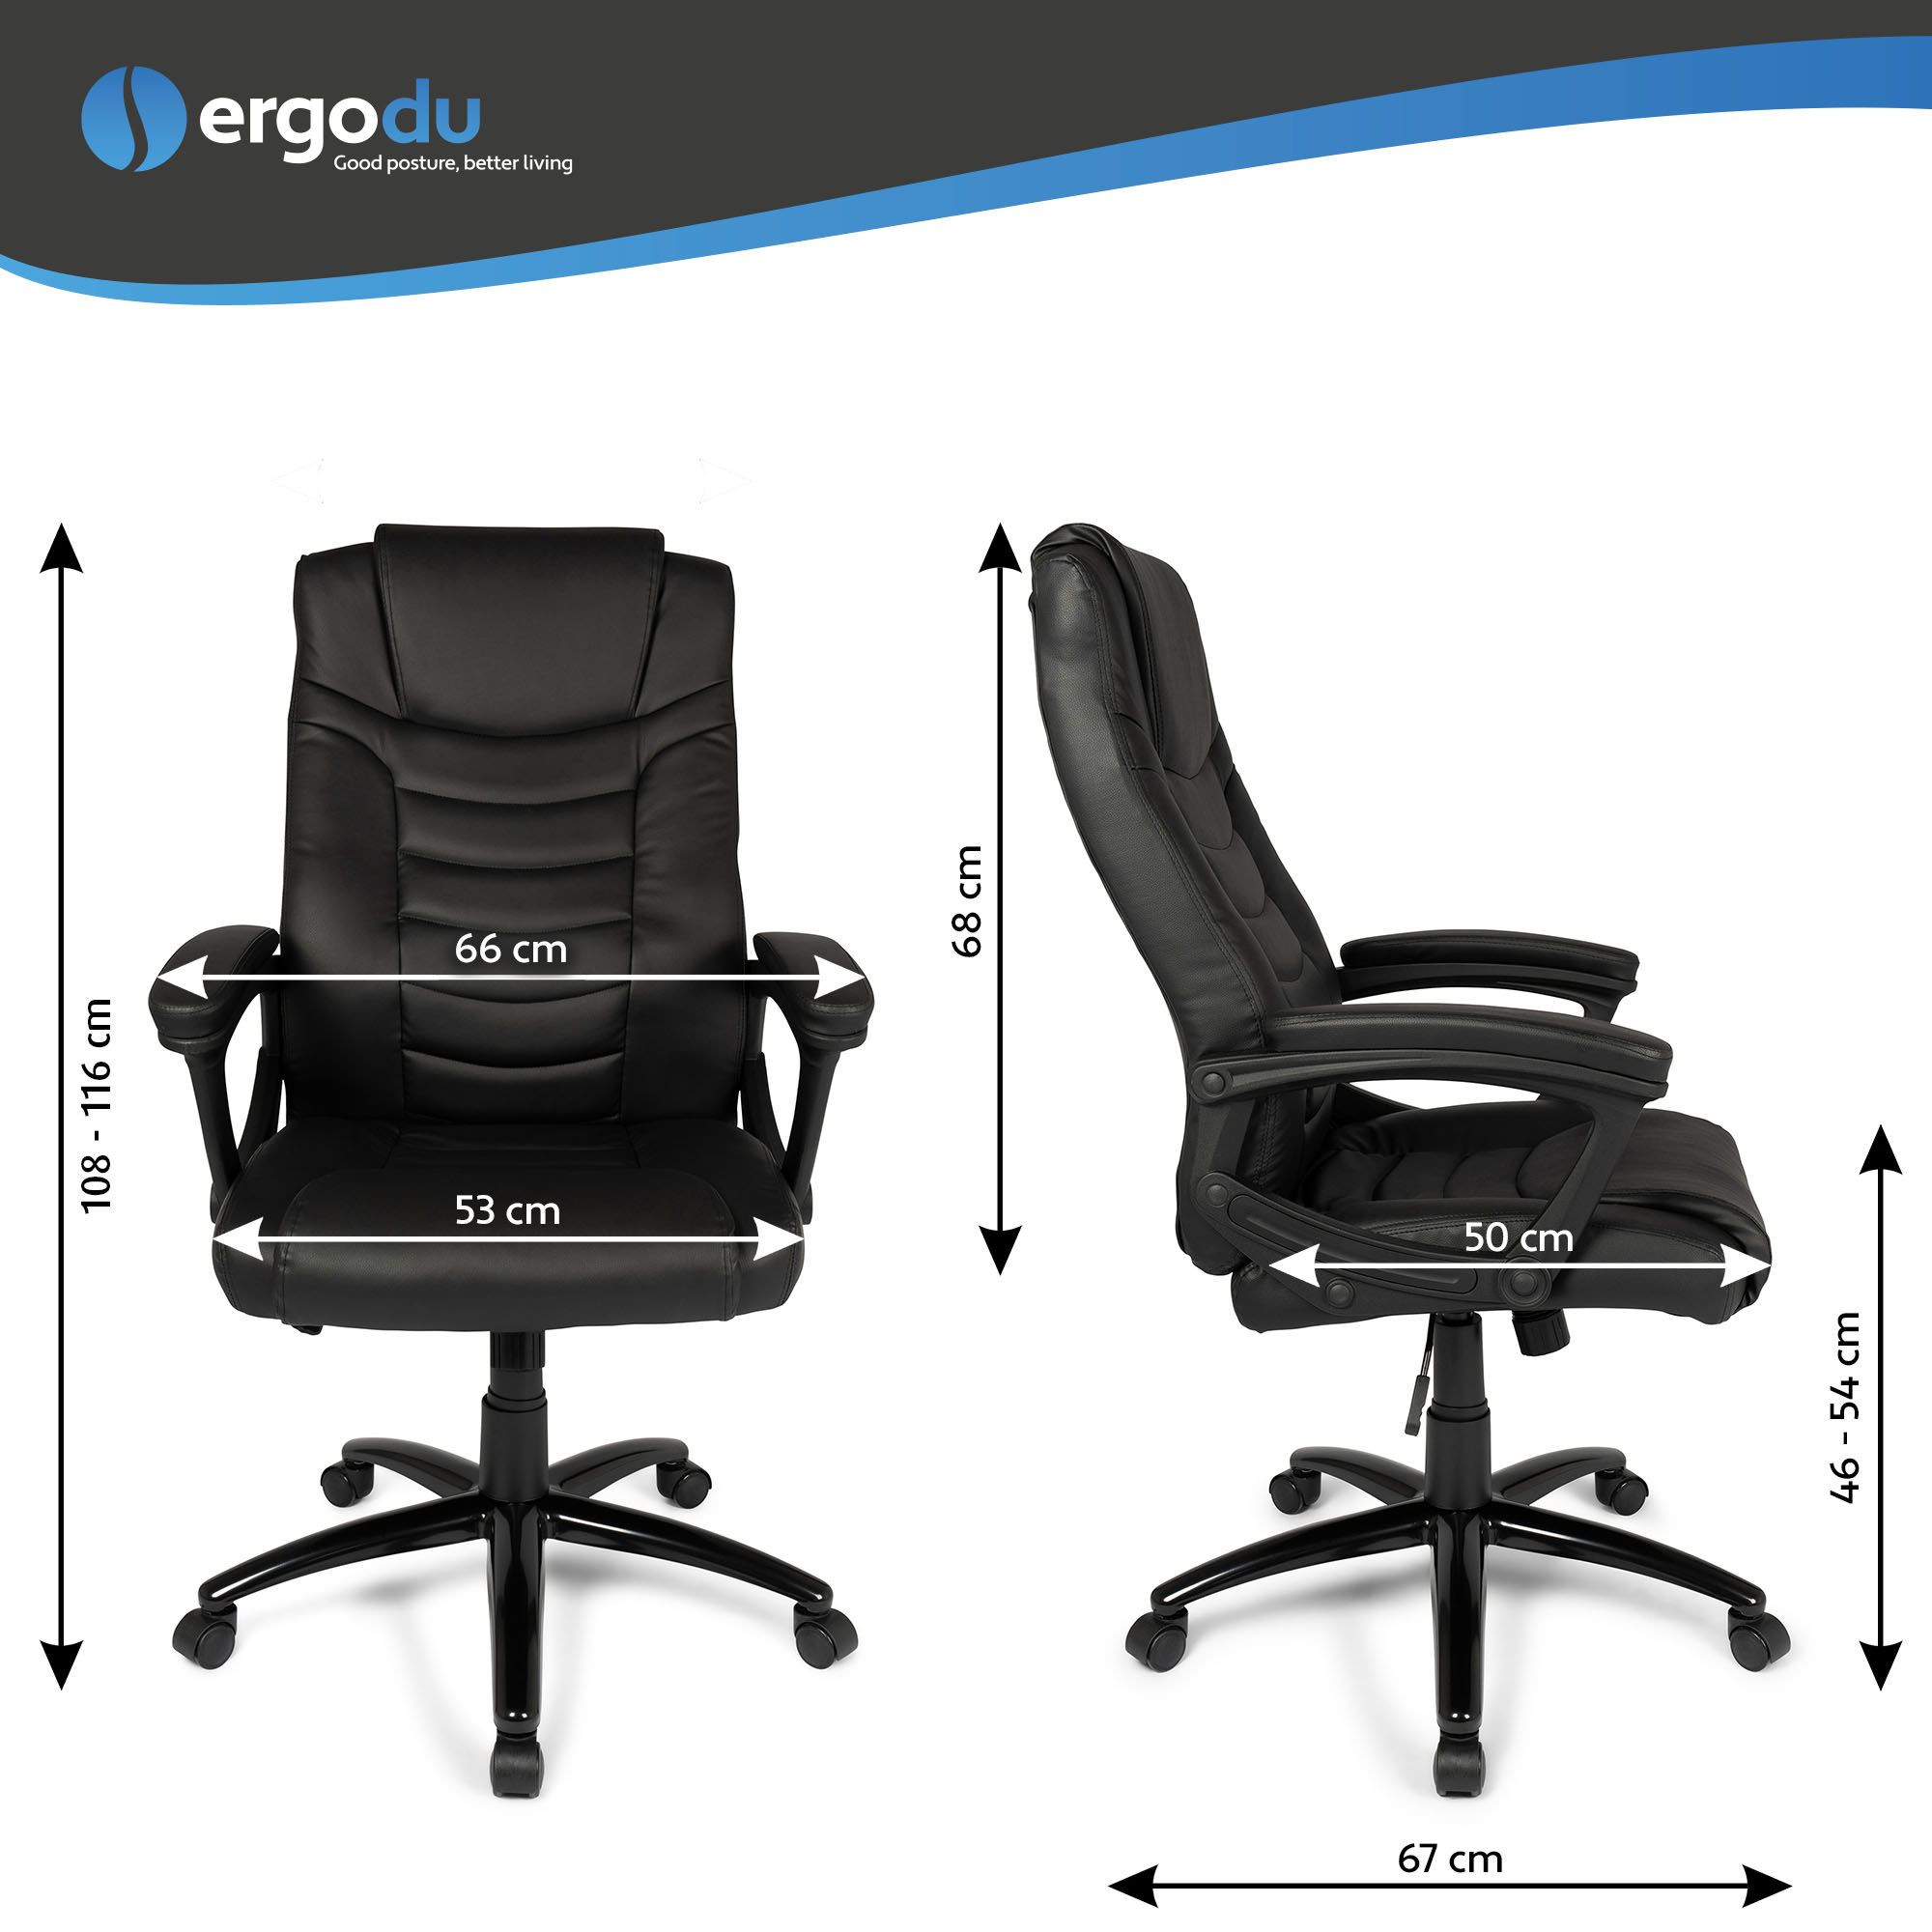 Ergodu Luxury Office Chair 